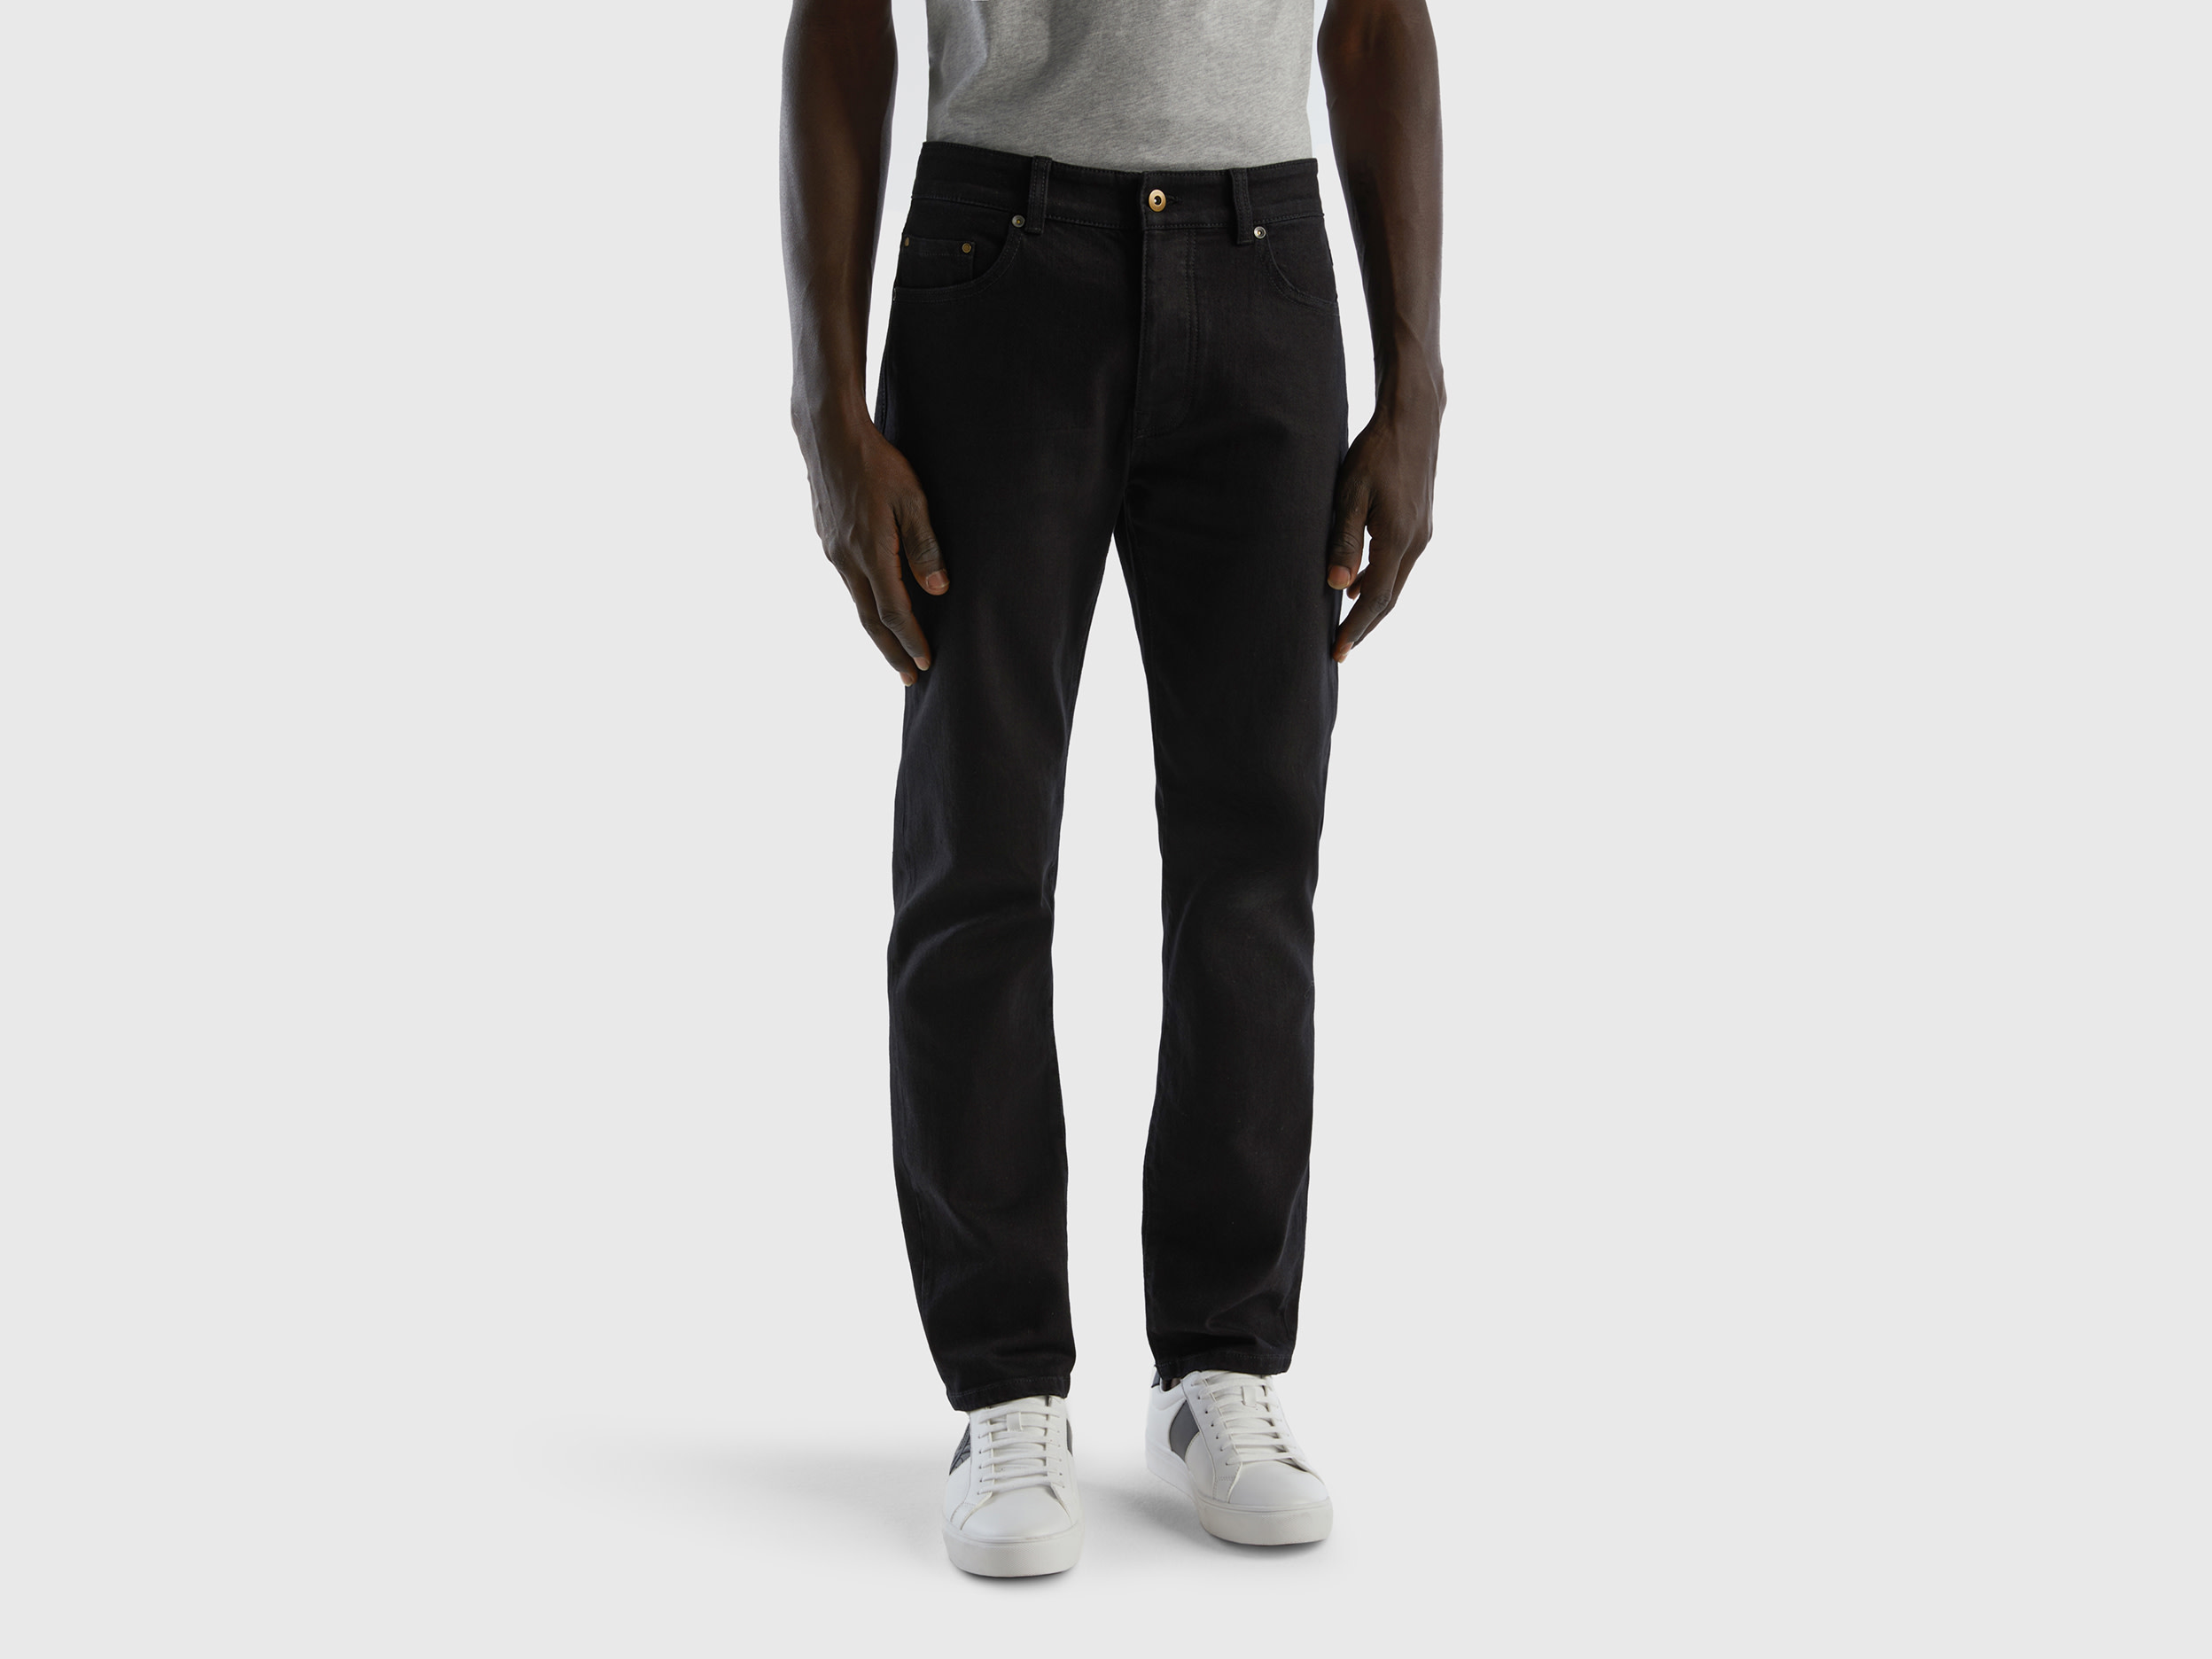 Benetton, Five Pocket Slim Fit Jeans, size 40, Black, Men